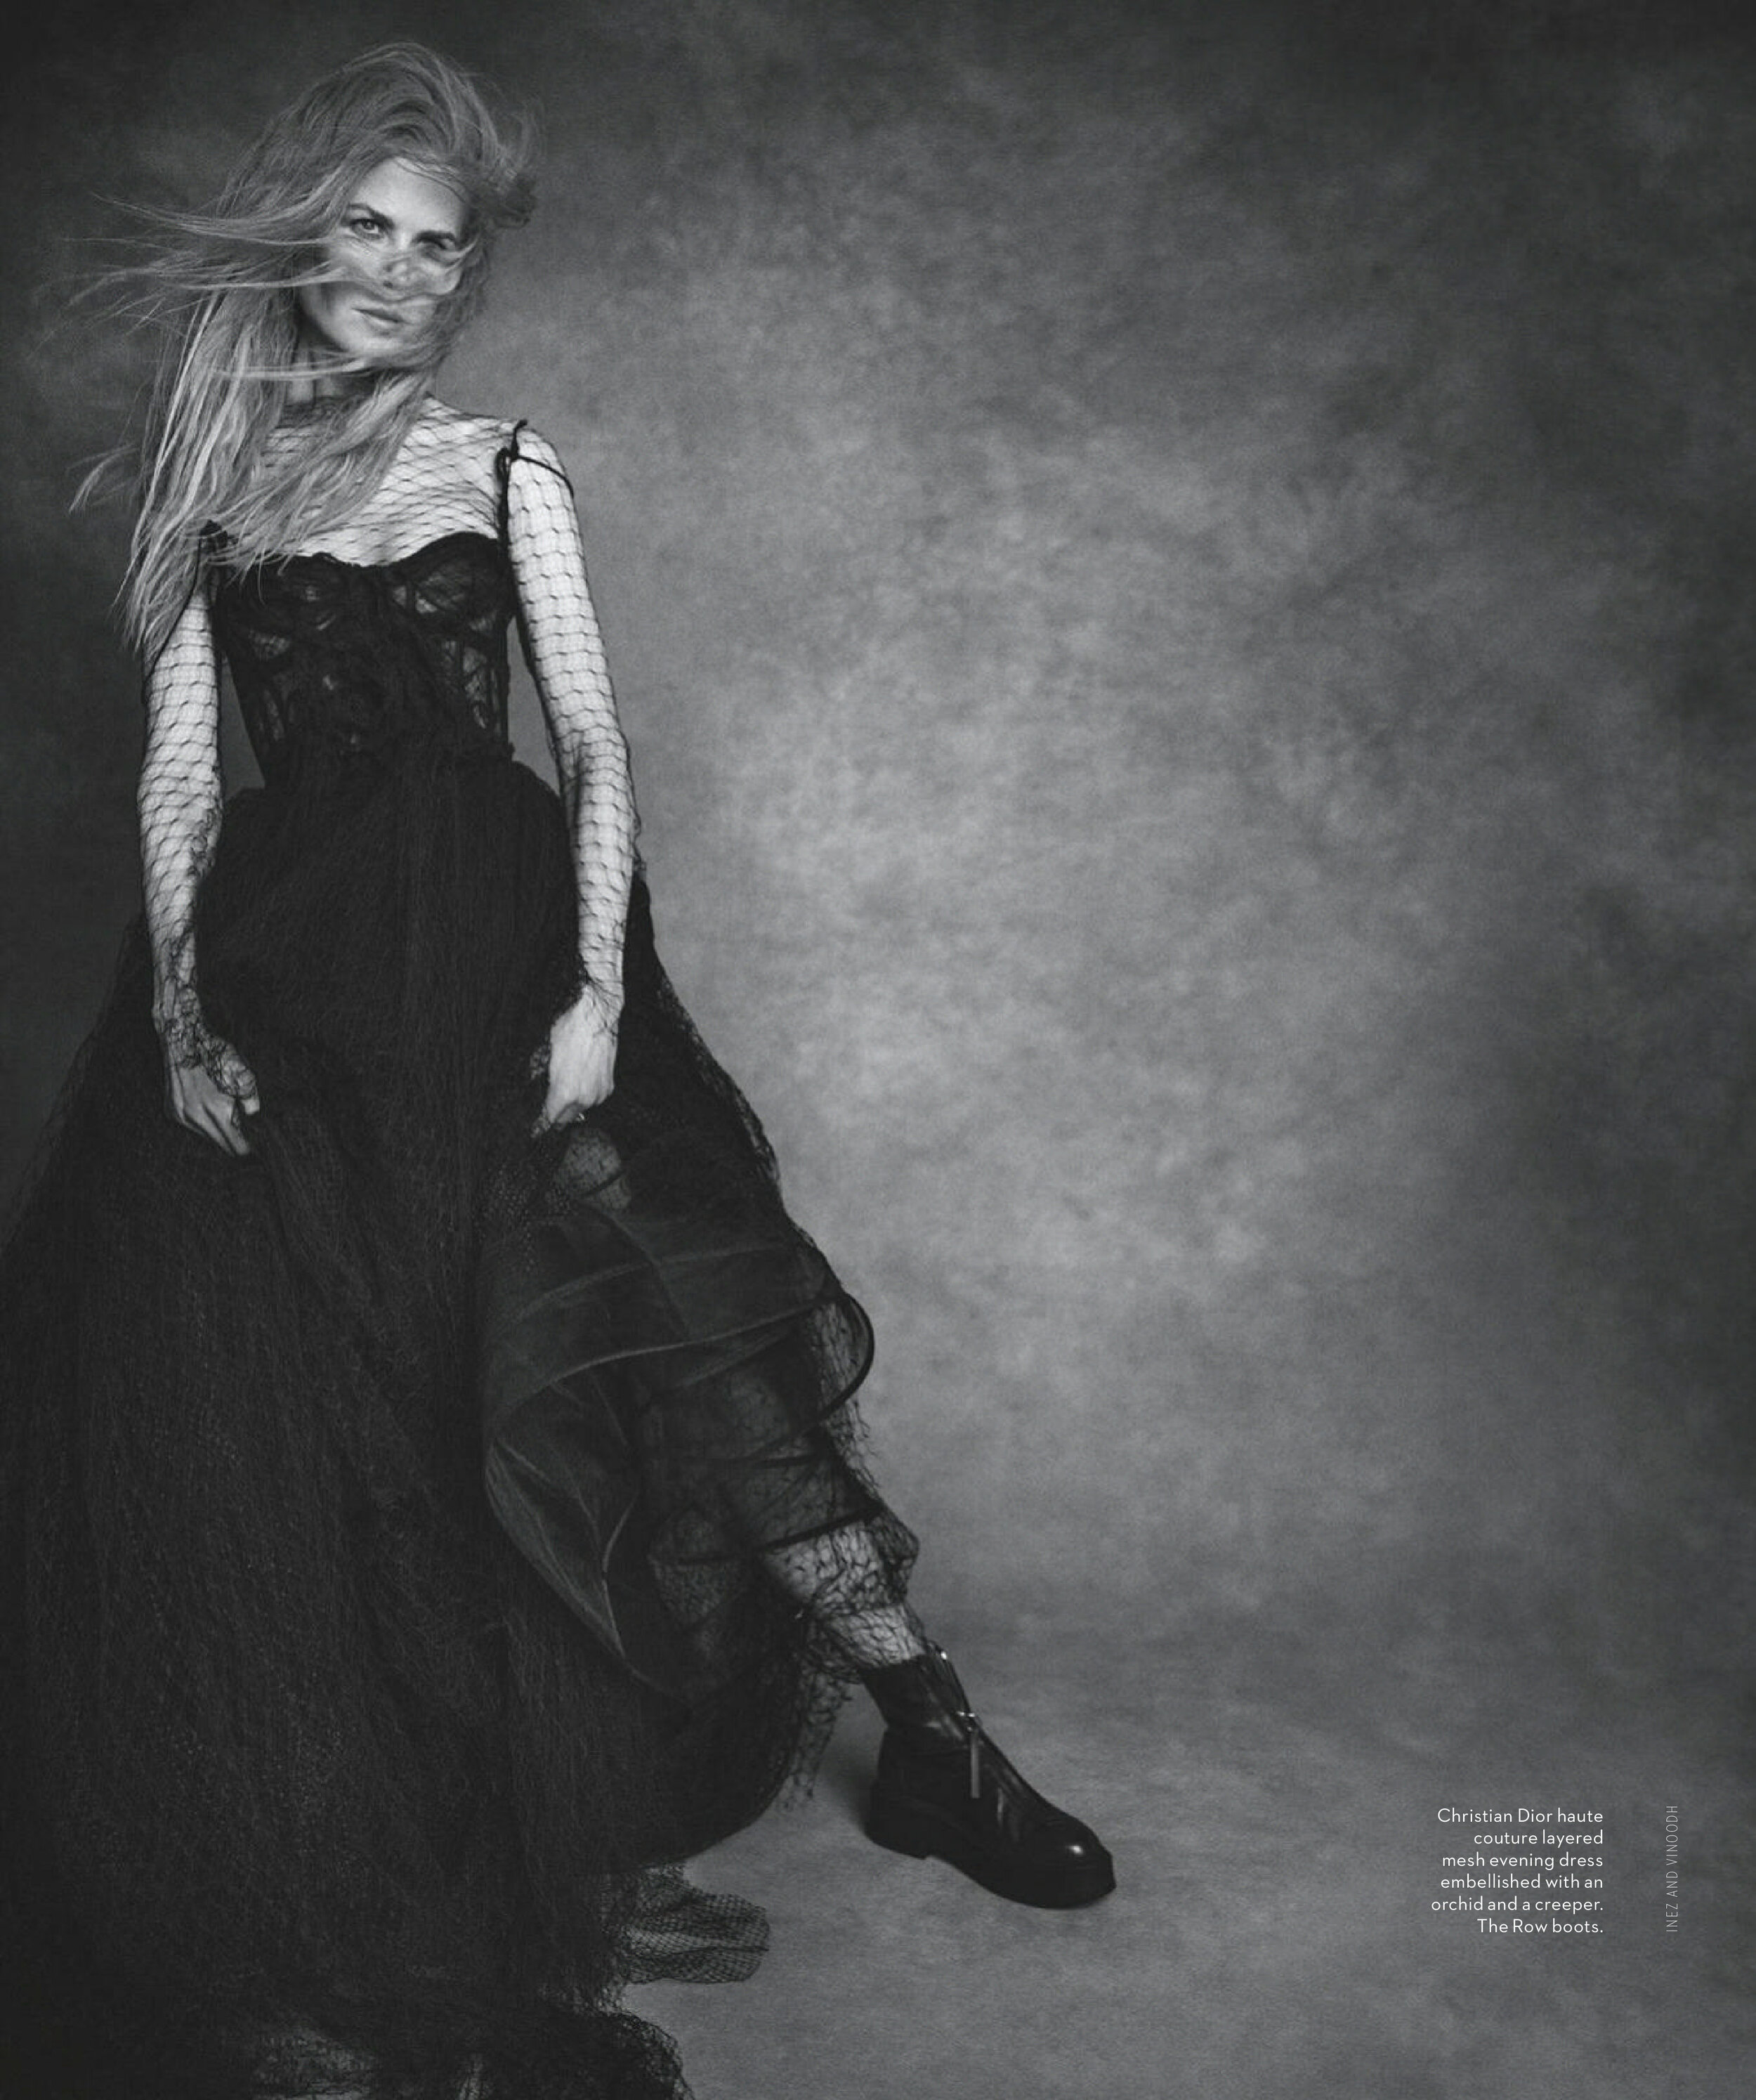 Nicole Kidman Stuns in Louis Vuitton for Vogue Australia January Cover